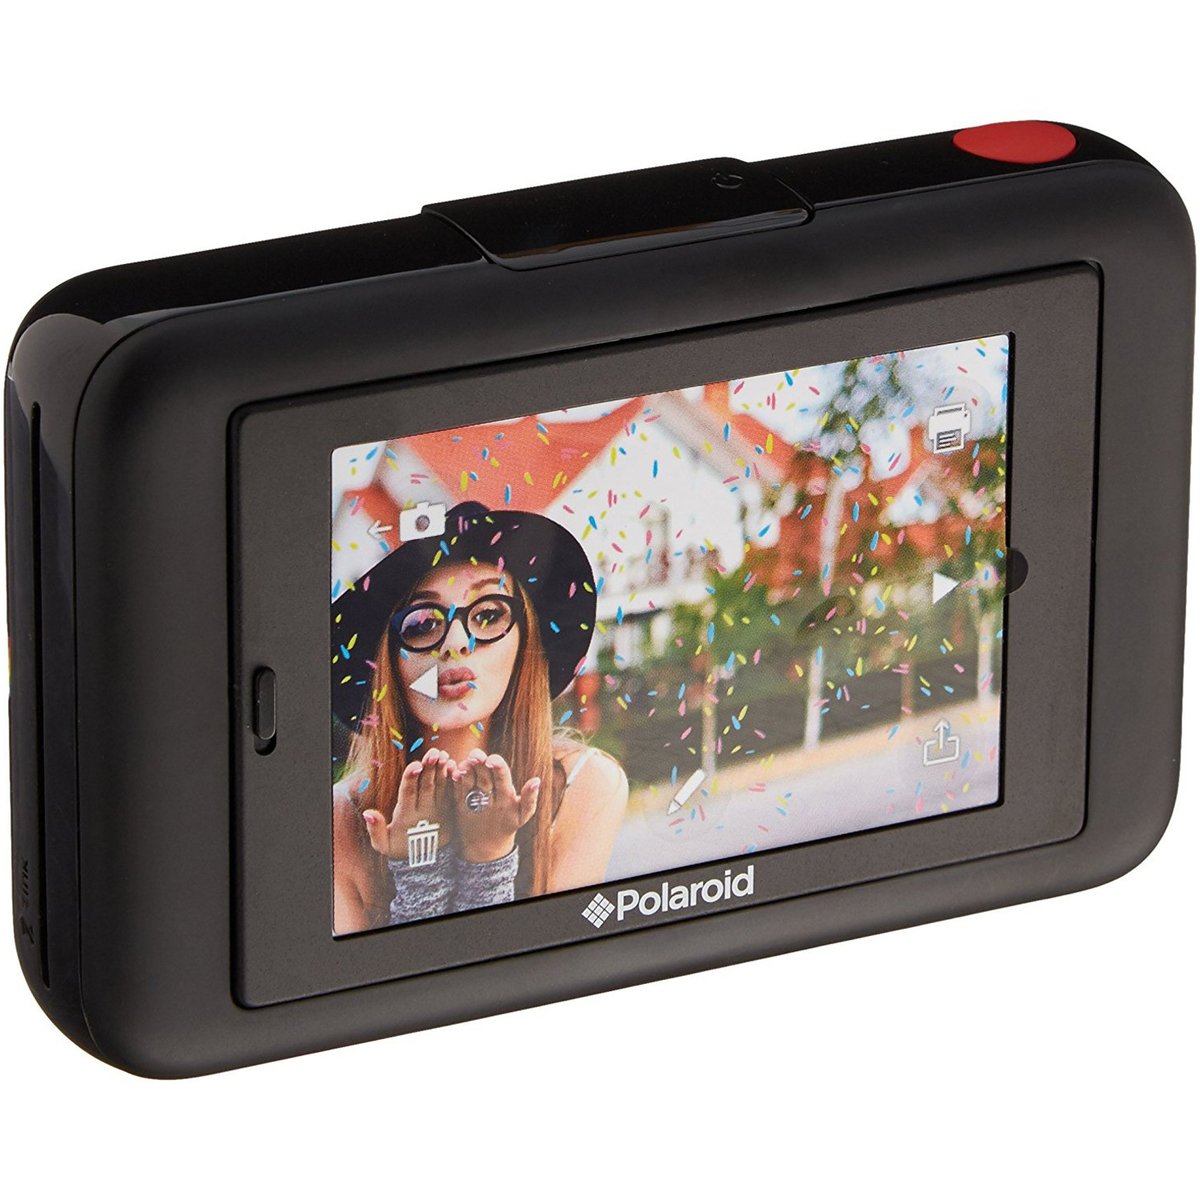 Polaroid Snap Touch Instant Print Digital Camera Black Online at